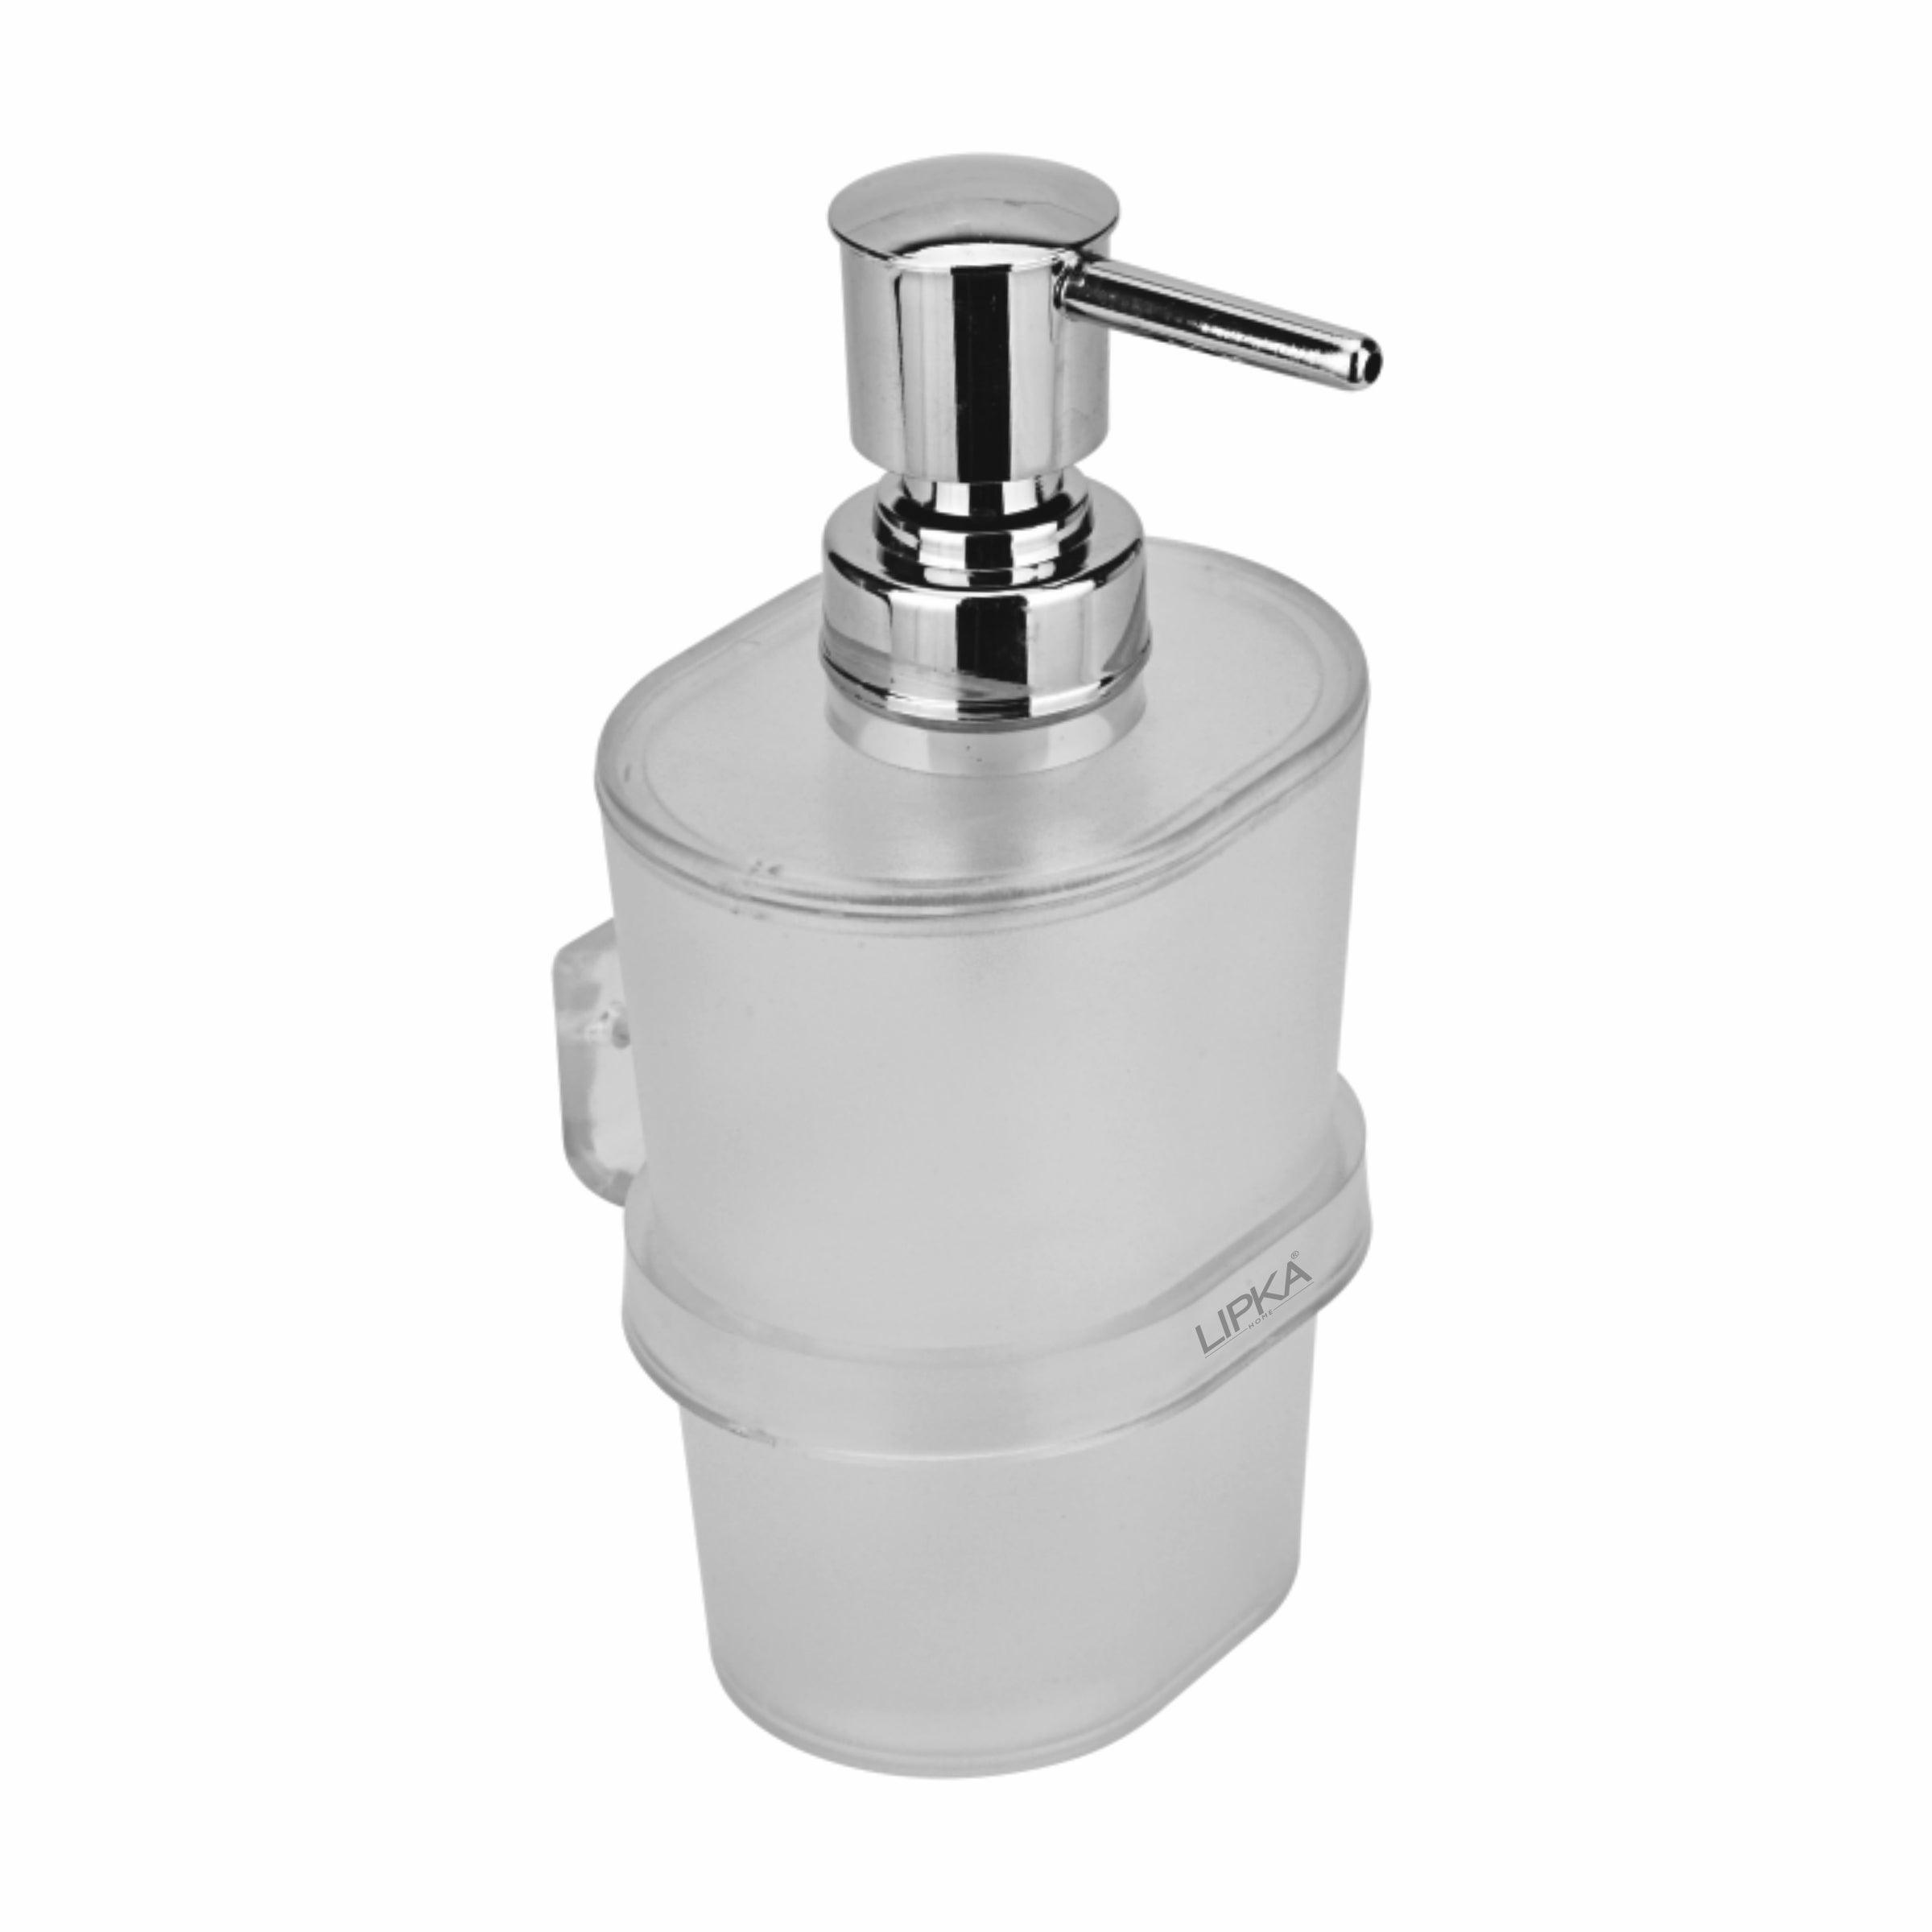 ABS Oval Liquid Soap Dispenser - LIPKA - Lipka Home